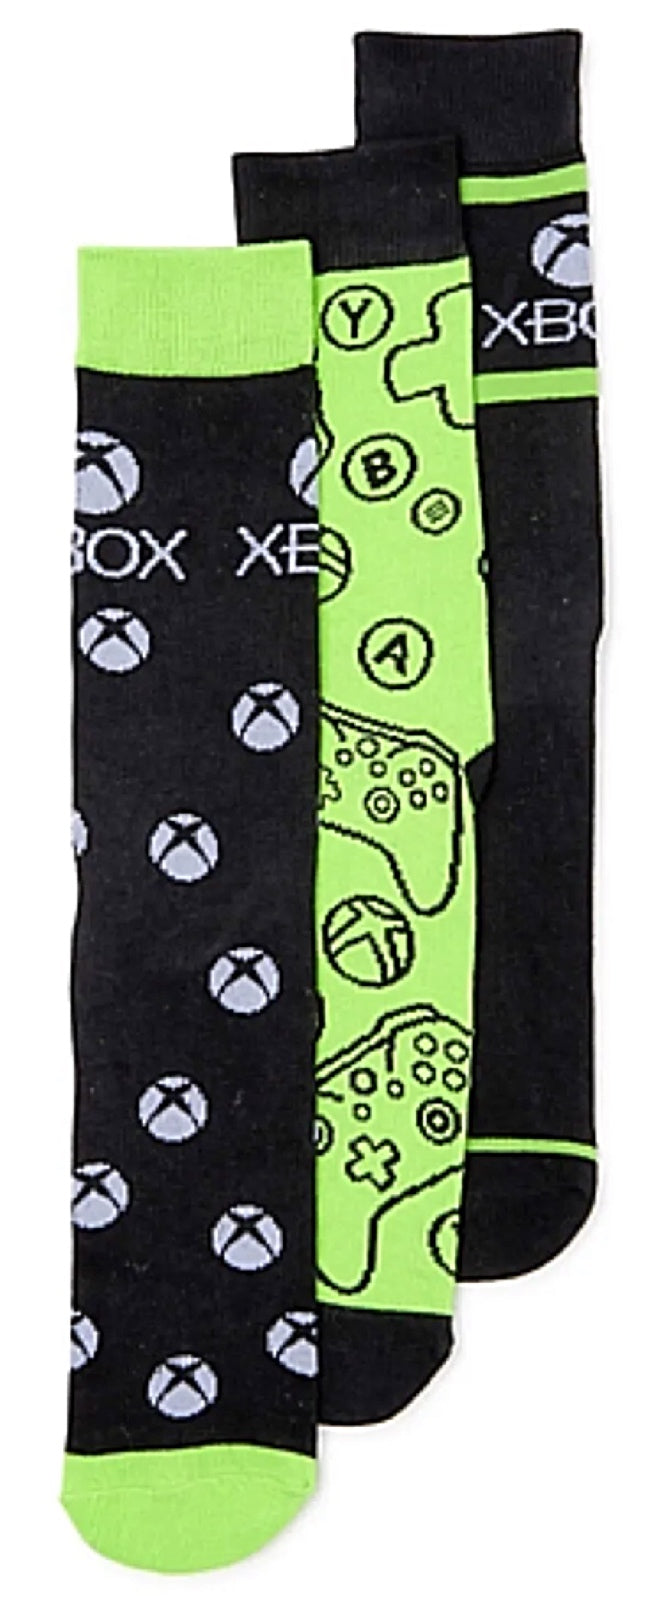 XBOX Men’s 3 Pair Of Socks Gift Set BIOWORLD Brand